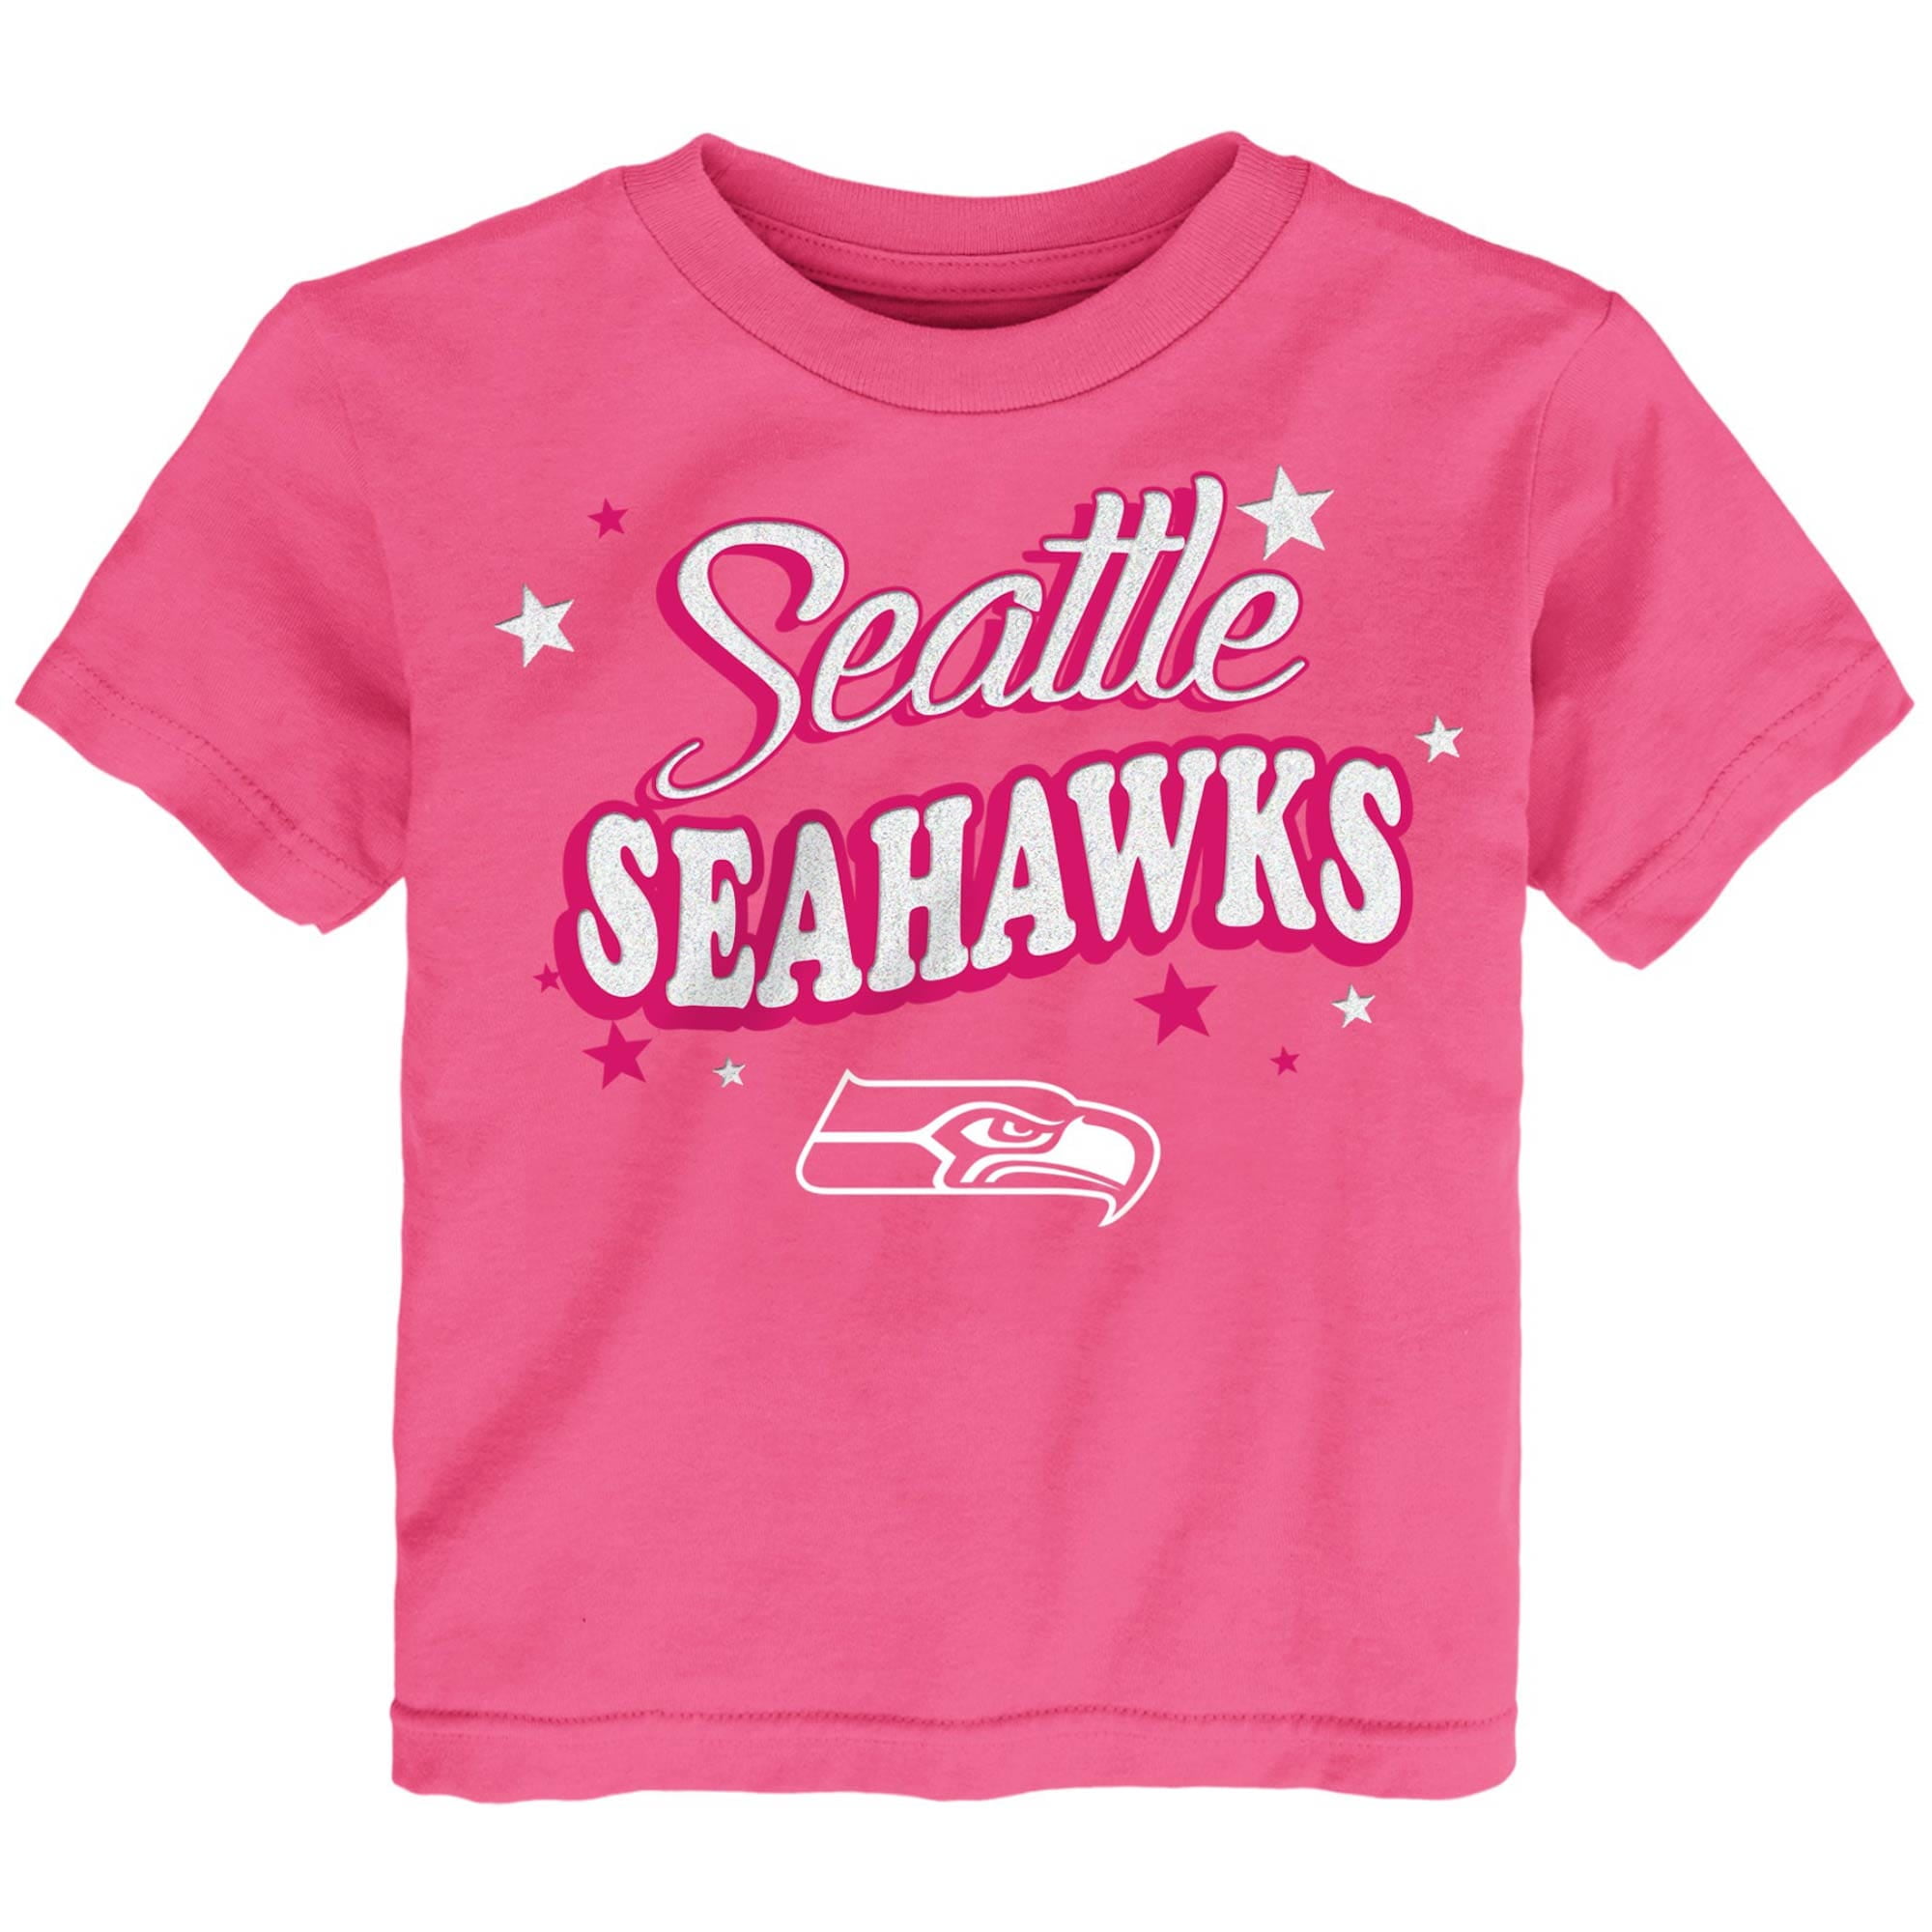 seahawks toddler t shirt